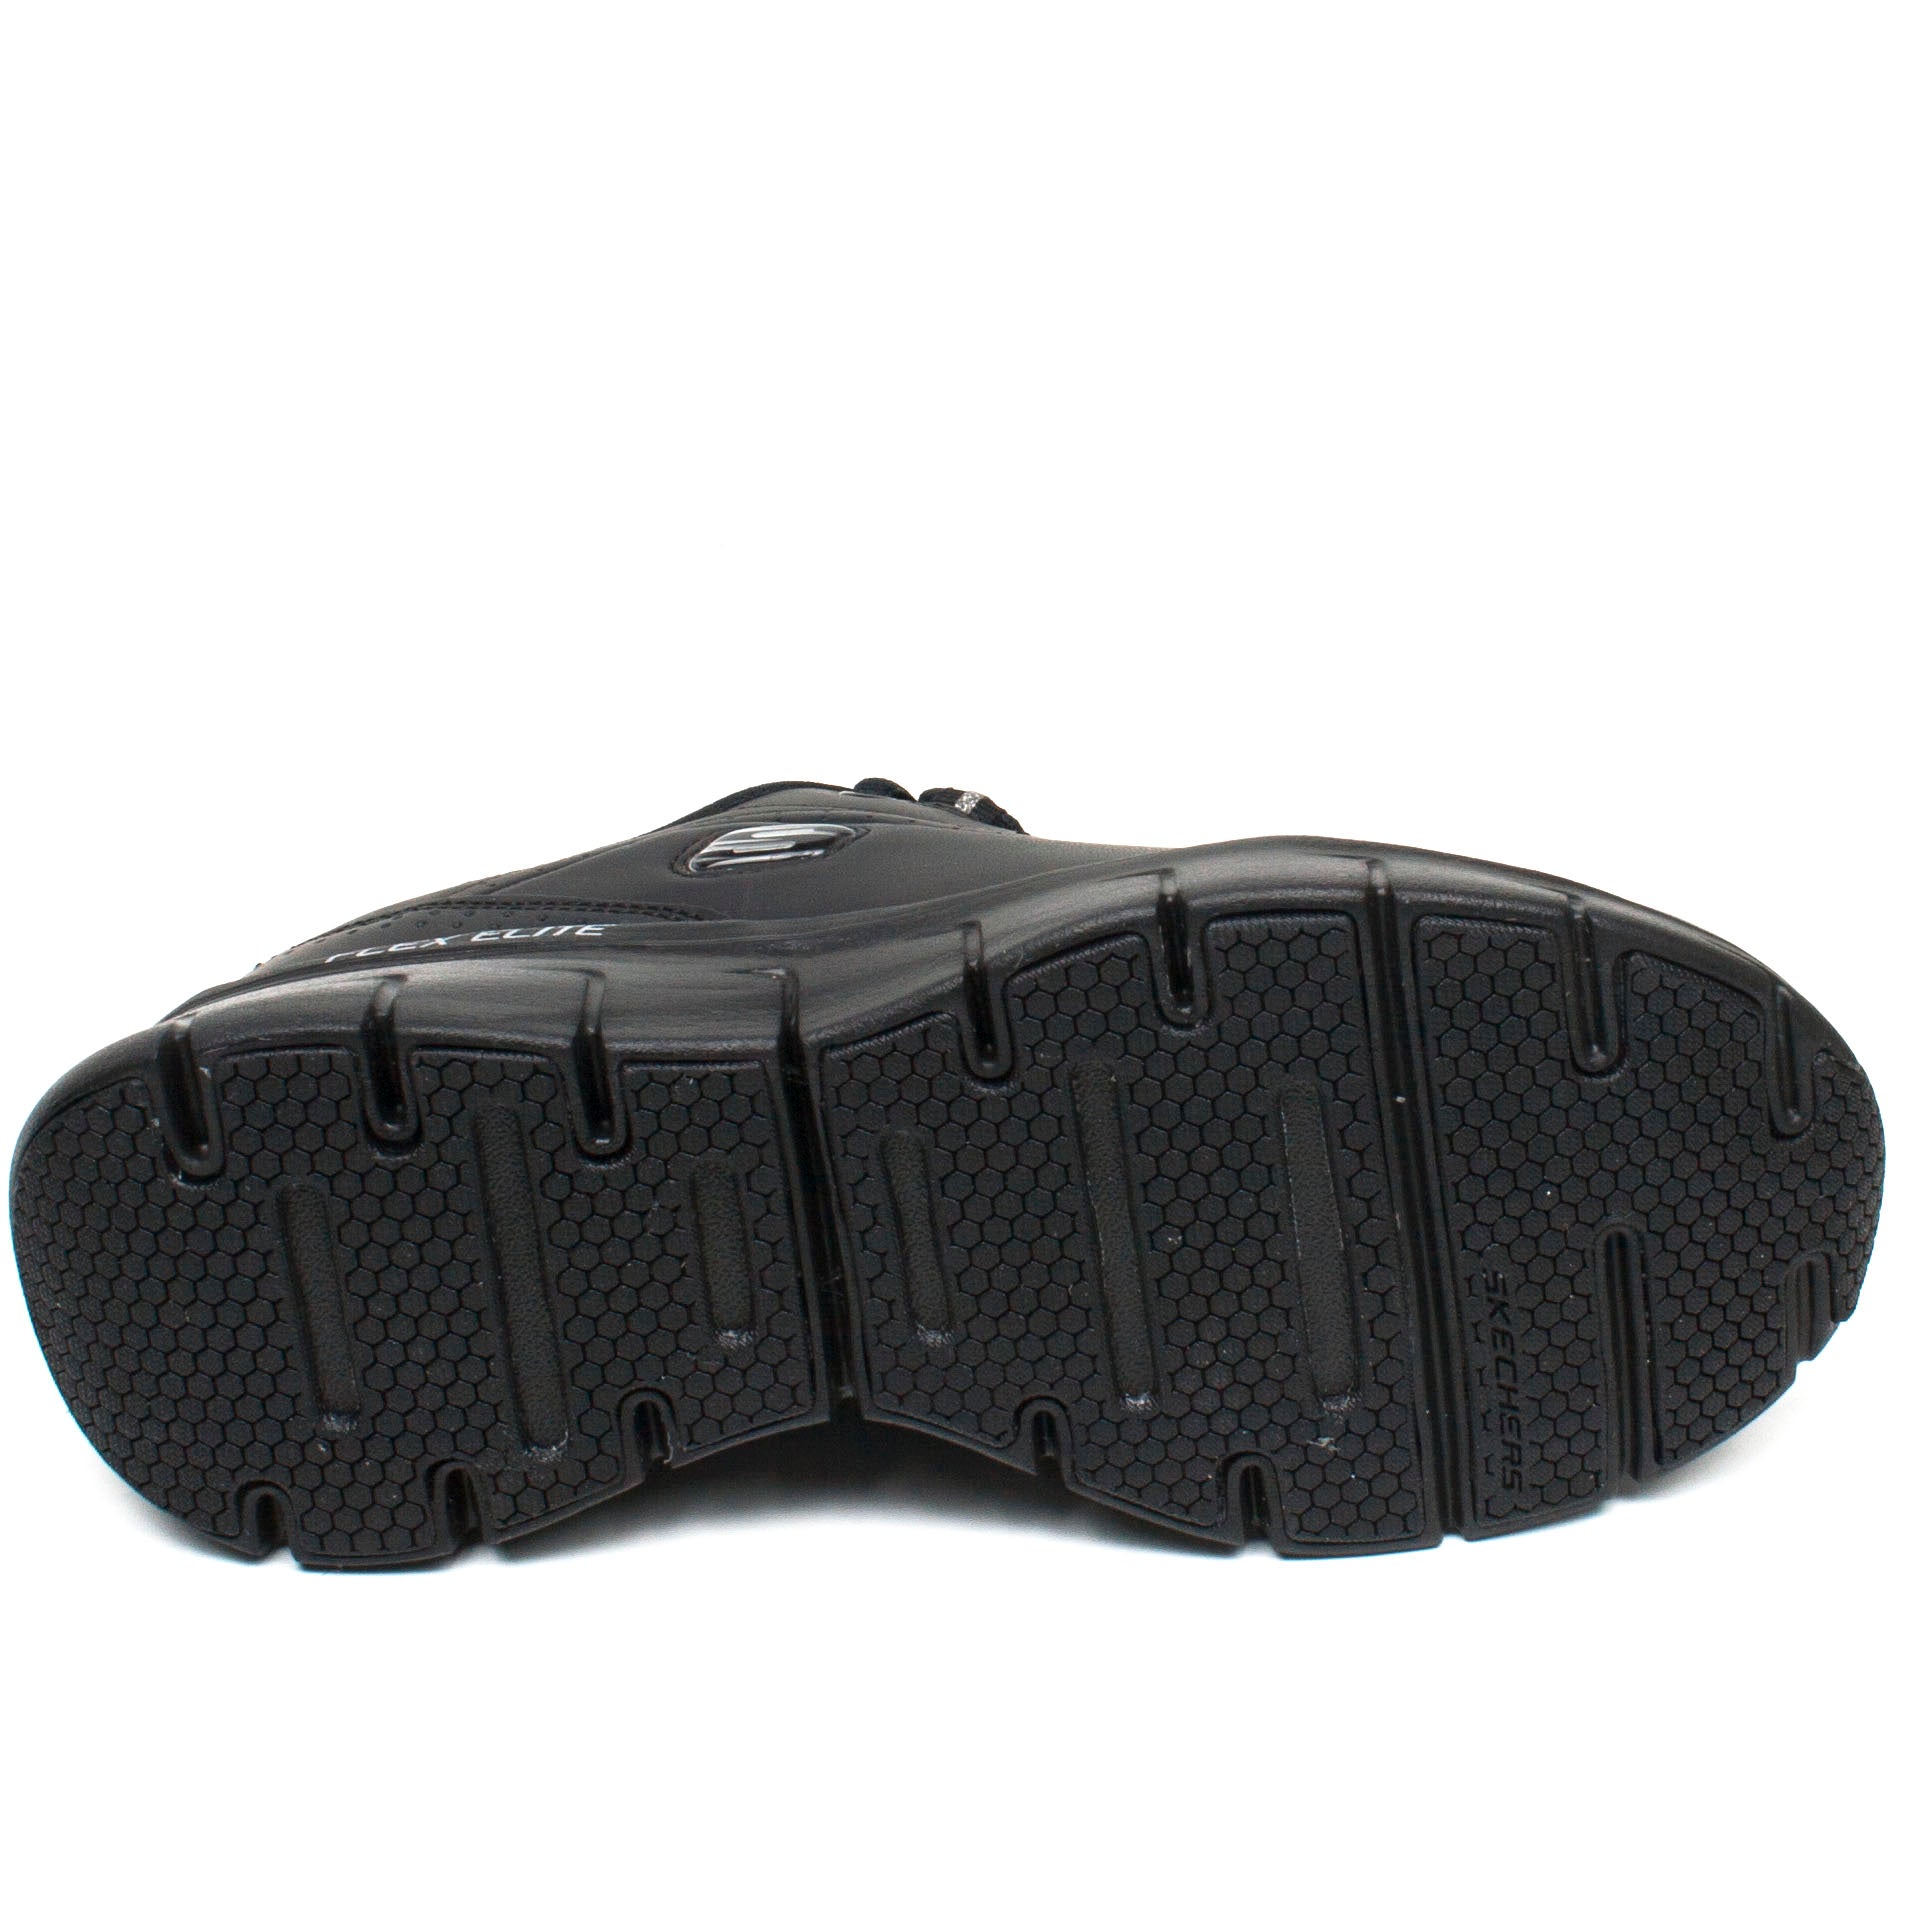 Skechers pantofi dama sport Synergy 3.0 negru ID1484-NG